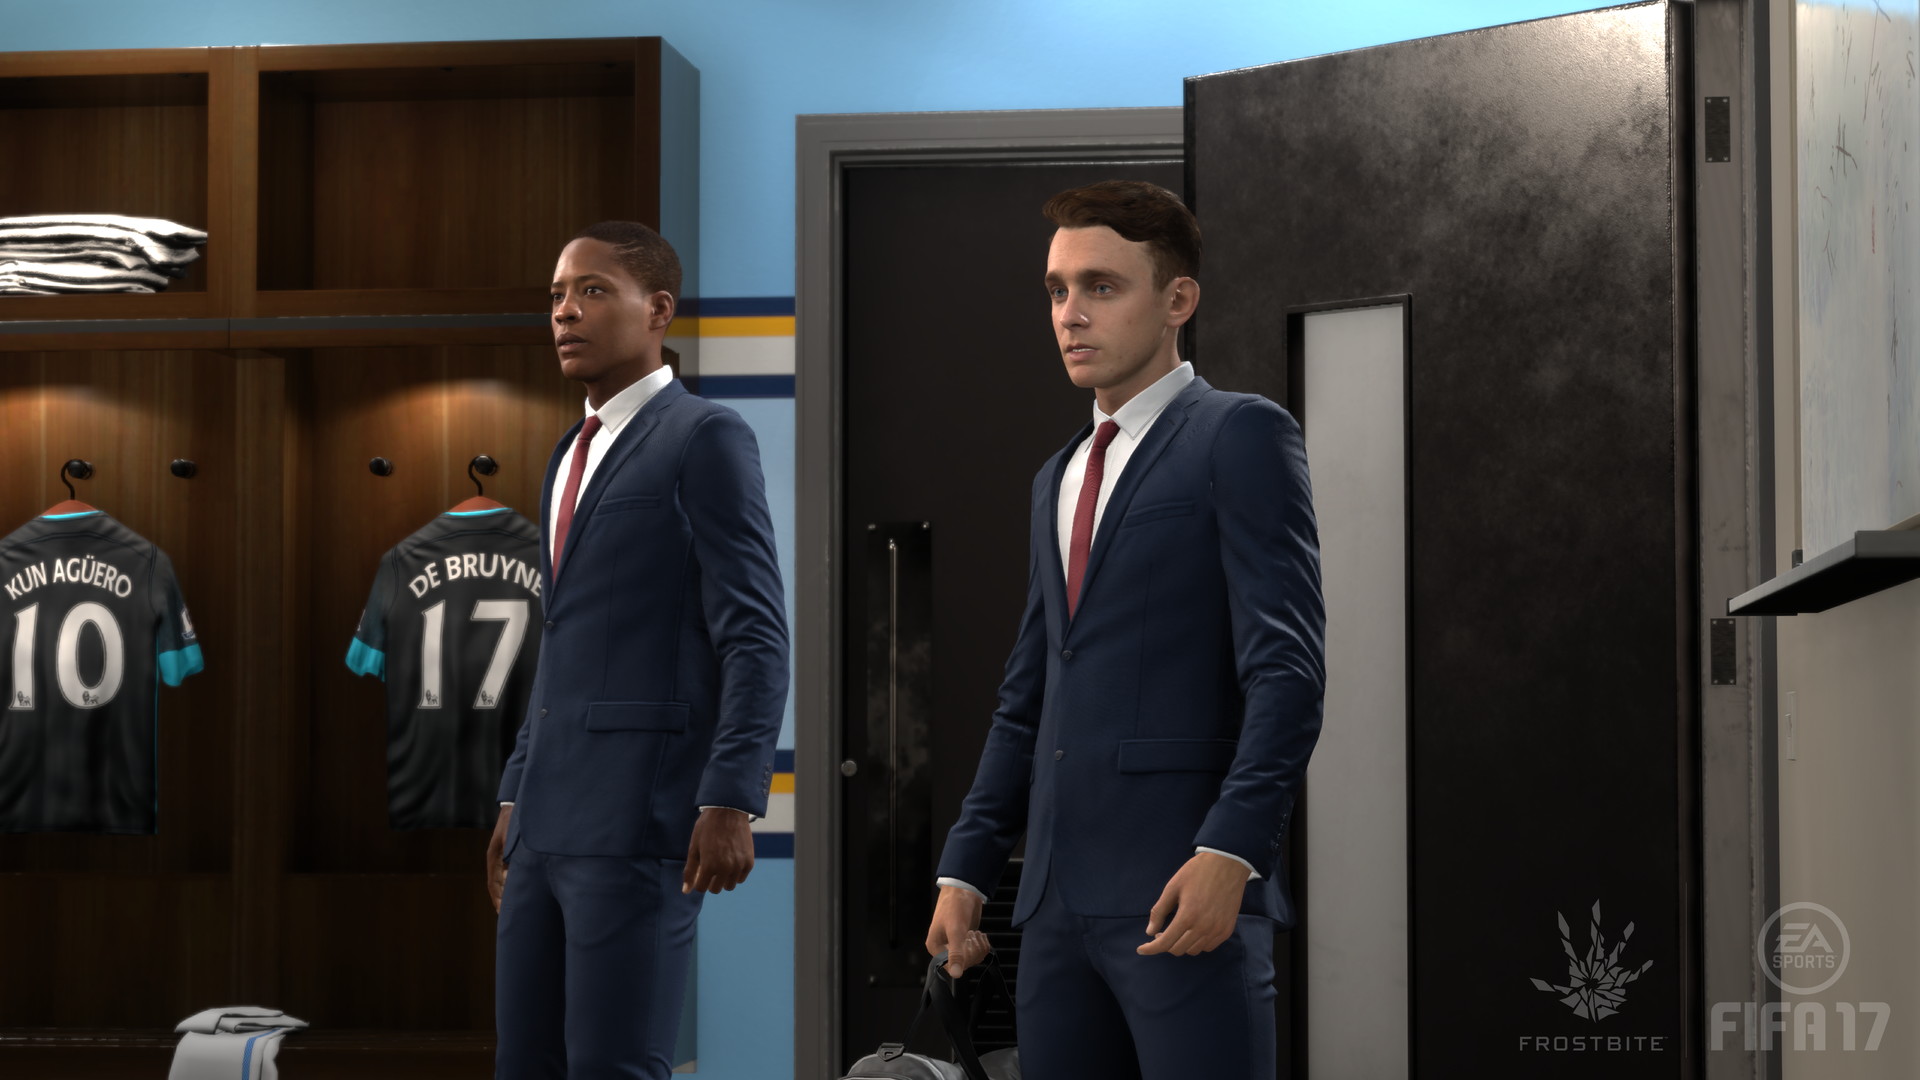 FIFA 17 - screenshot 7